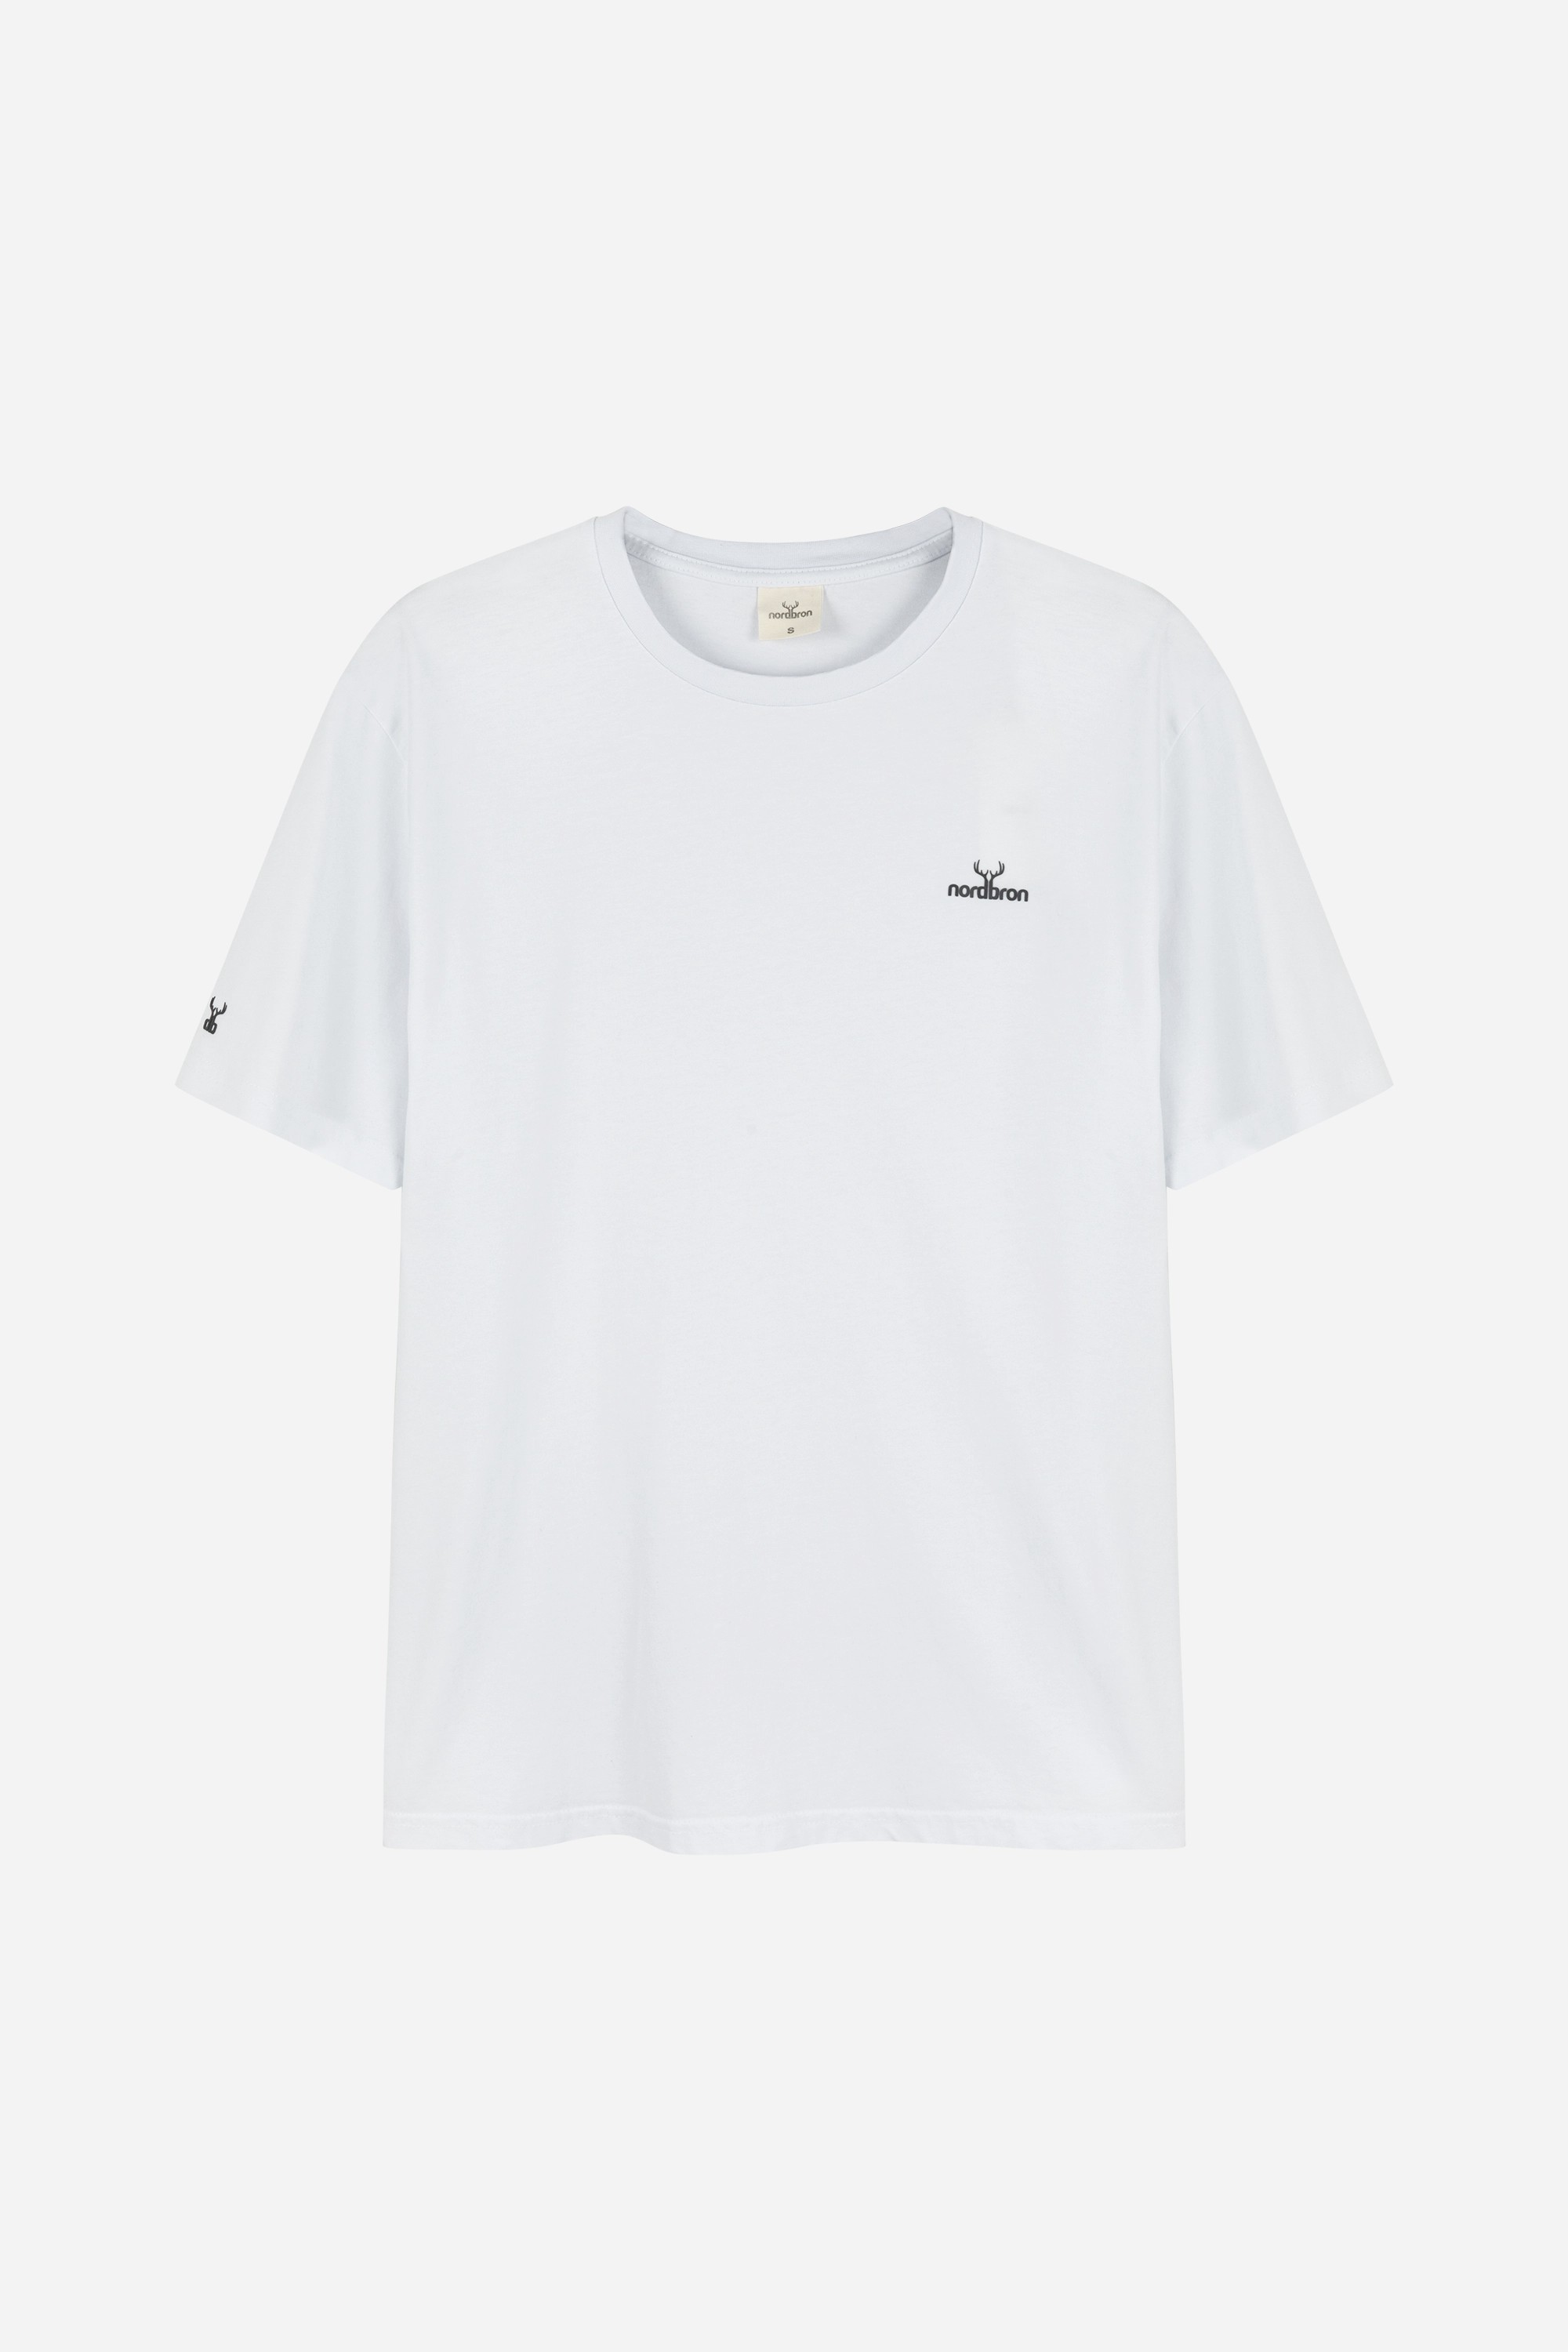 Dussel Nordbron T-shirt - White